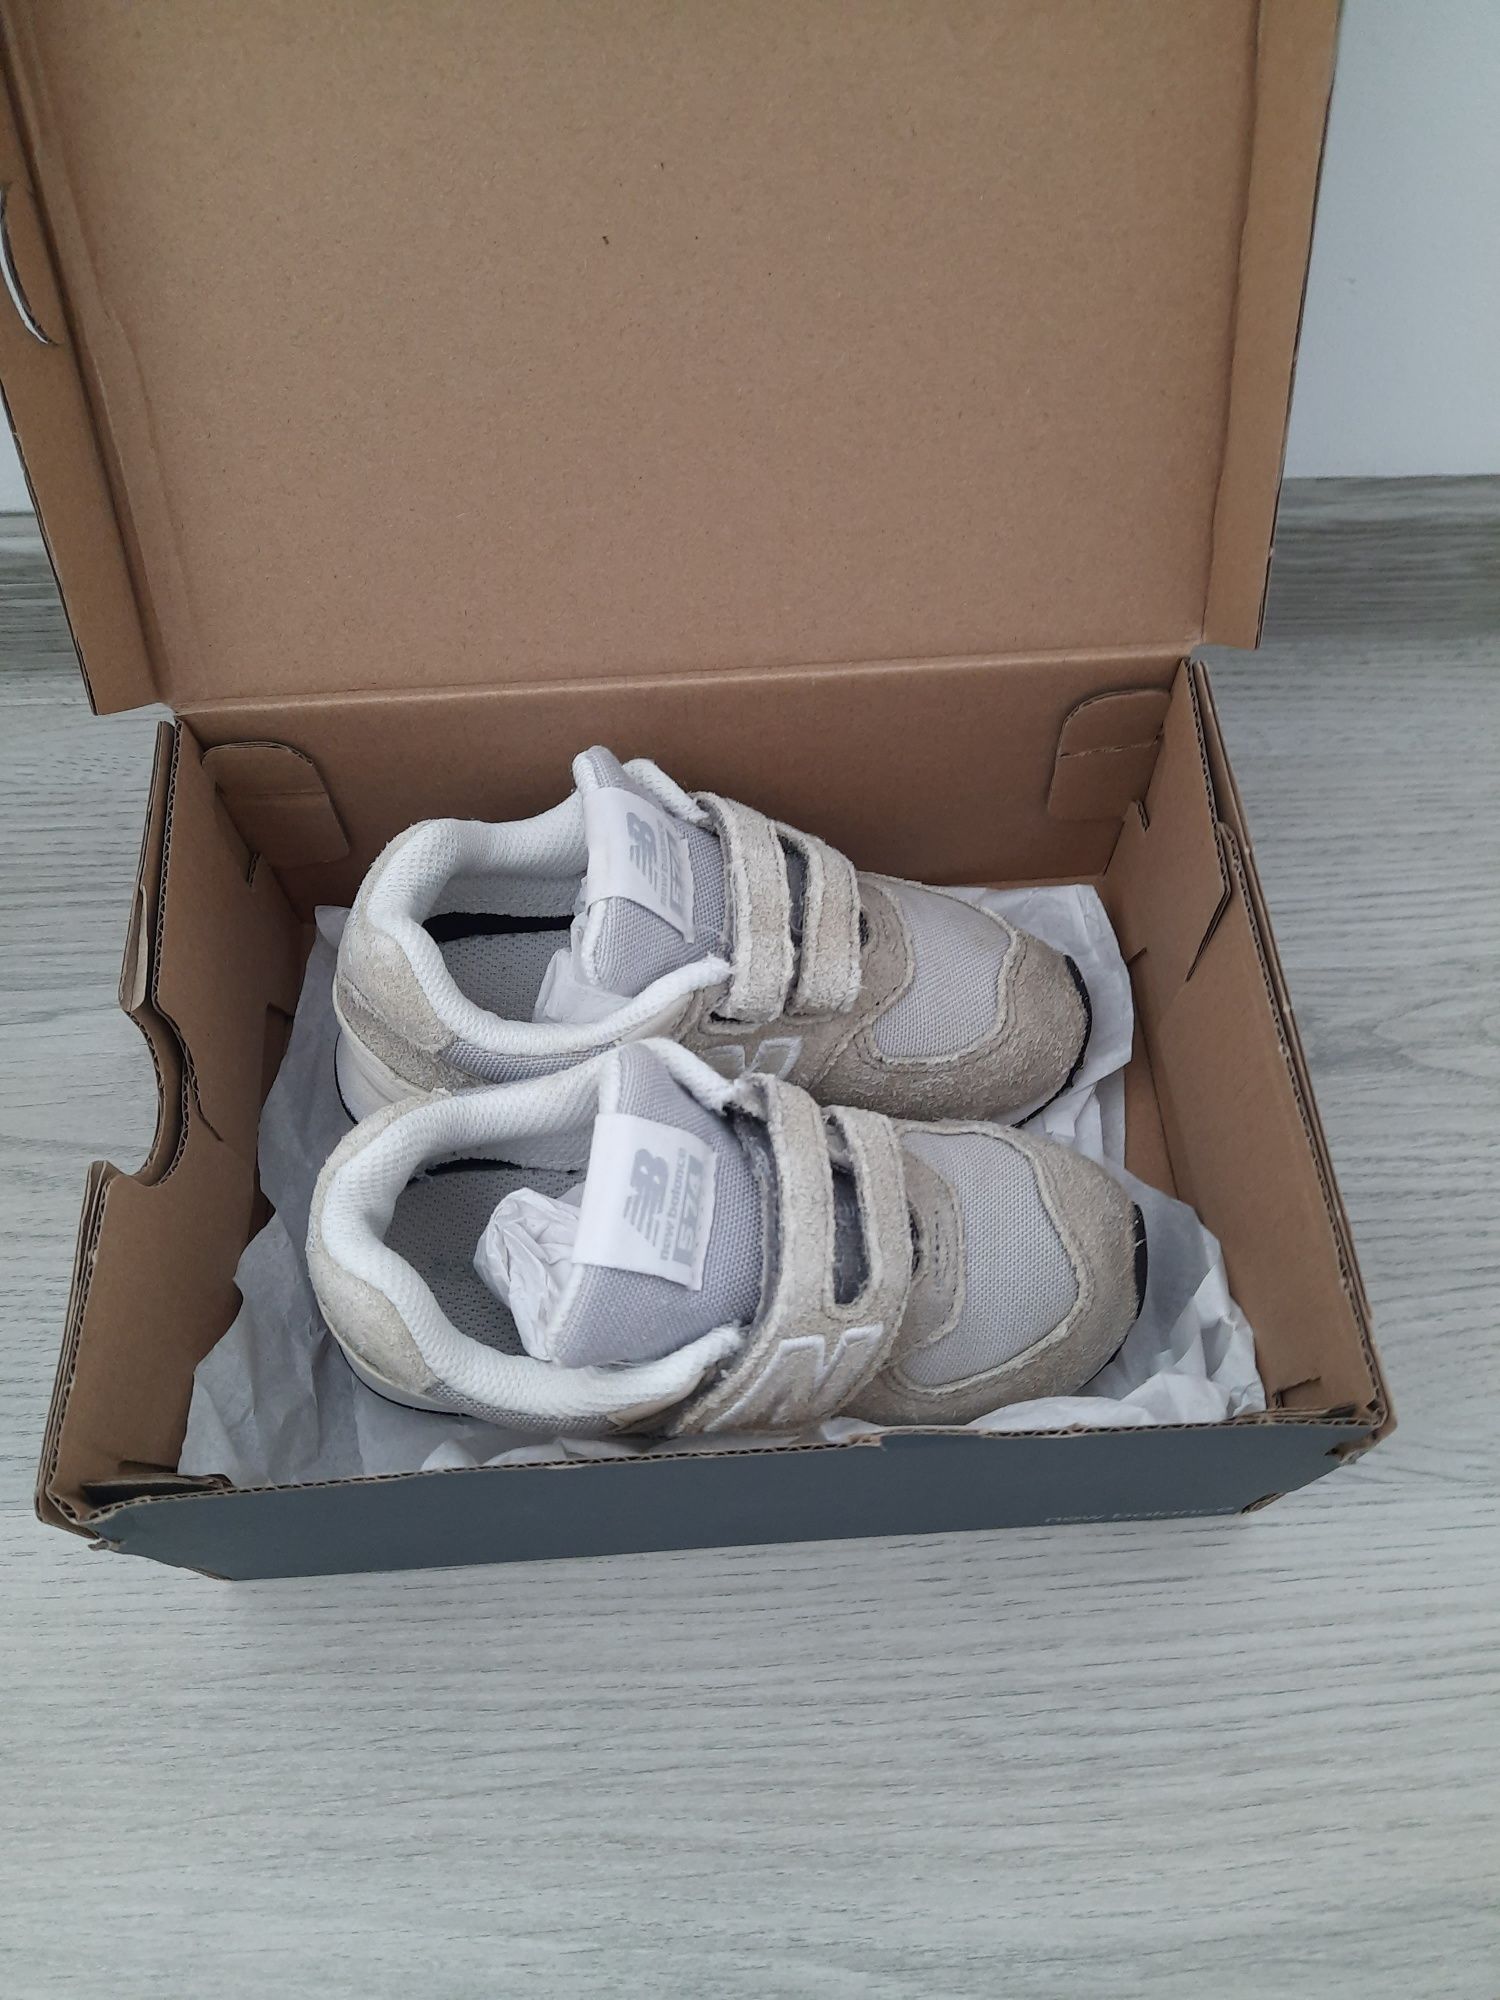 Adidasi copii New Balance nr 25, 15 cm